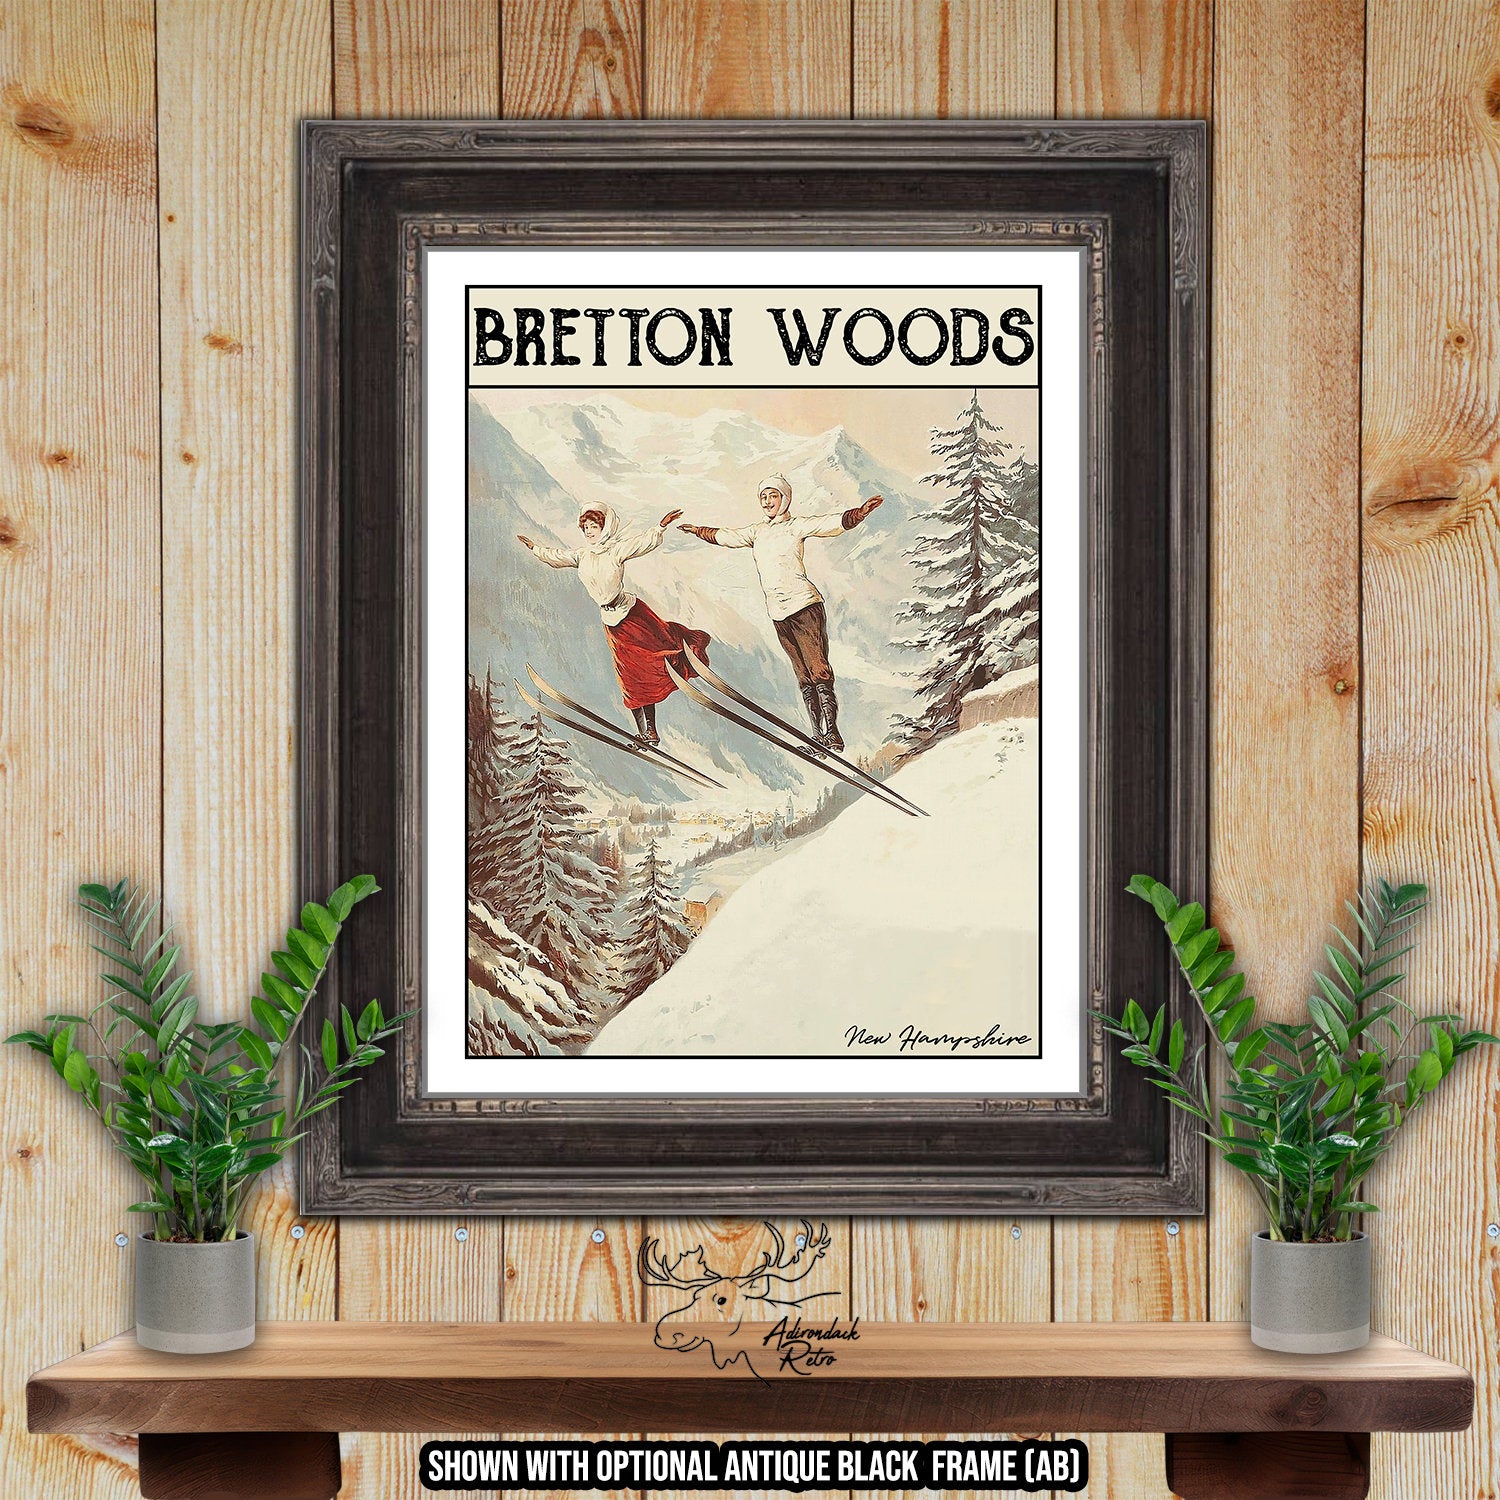 Bretton Woods New Hampshire Retro Ski Resort Print at Adirondack Retro